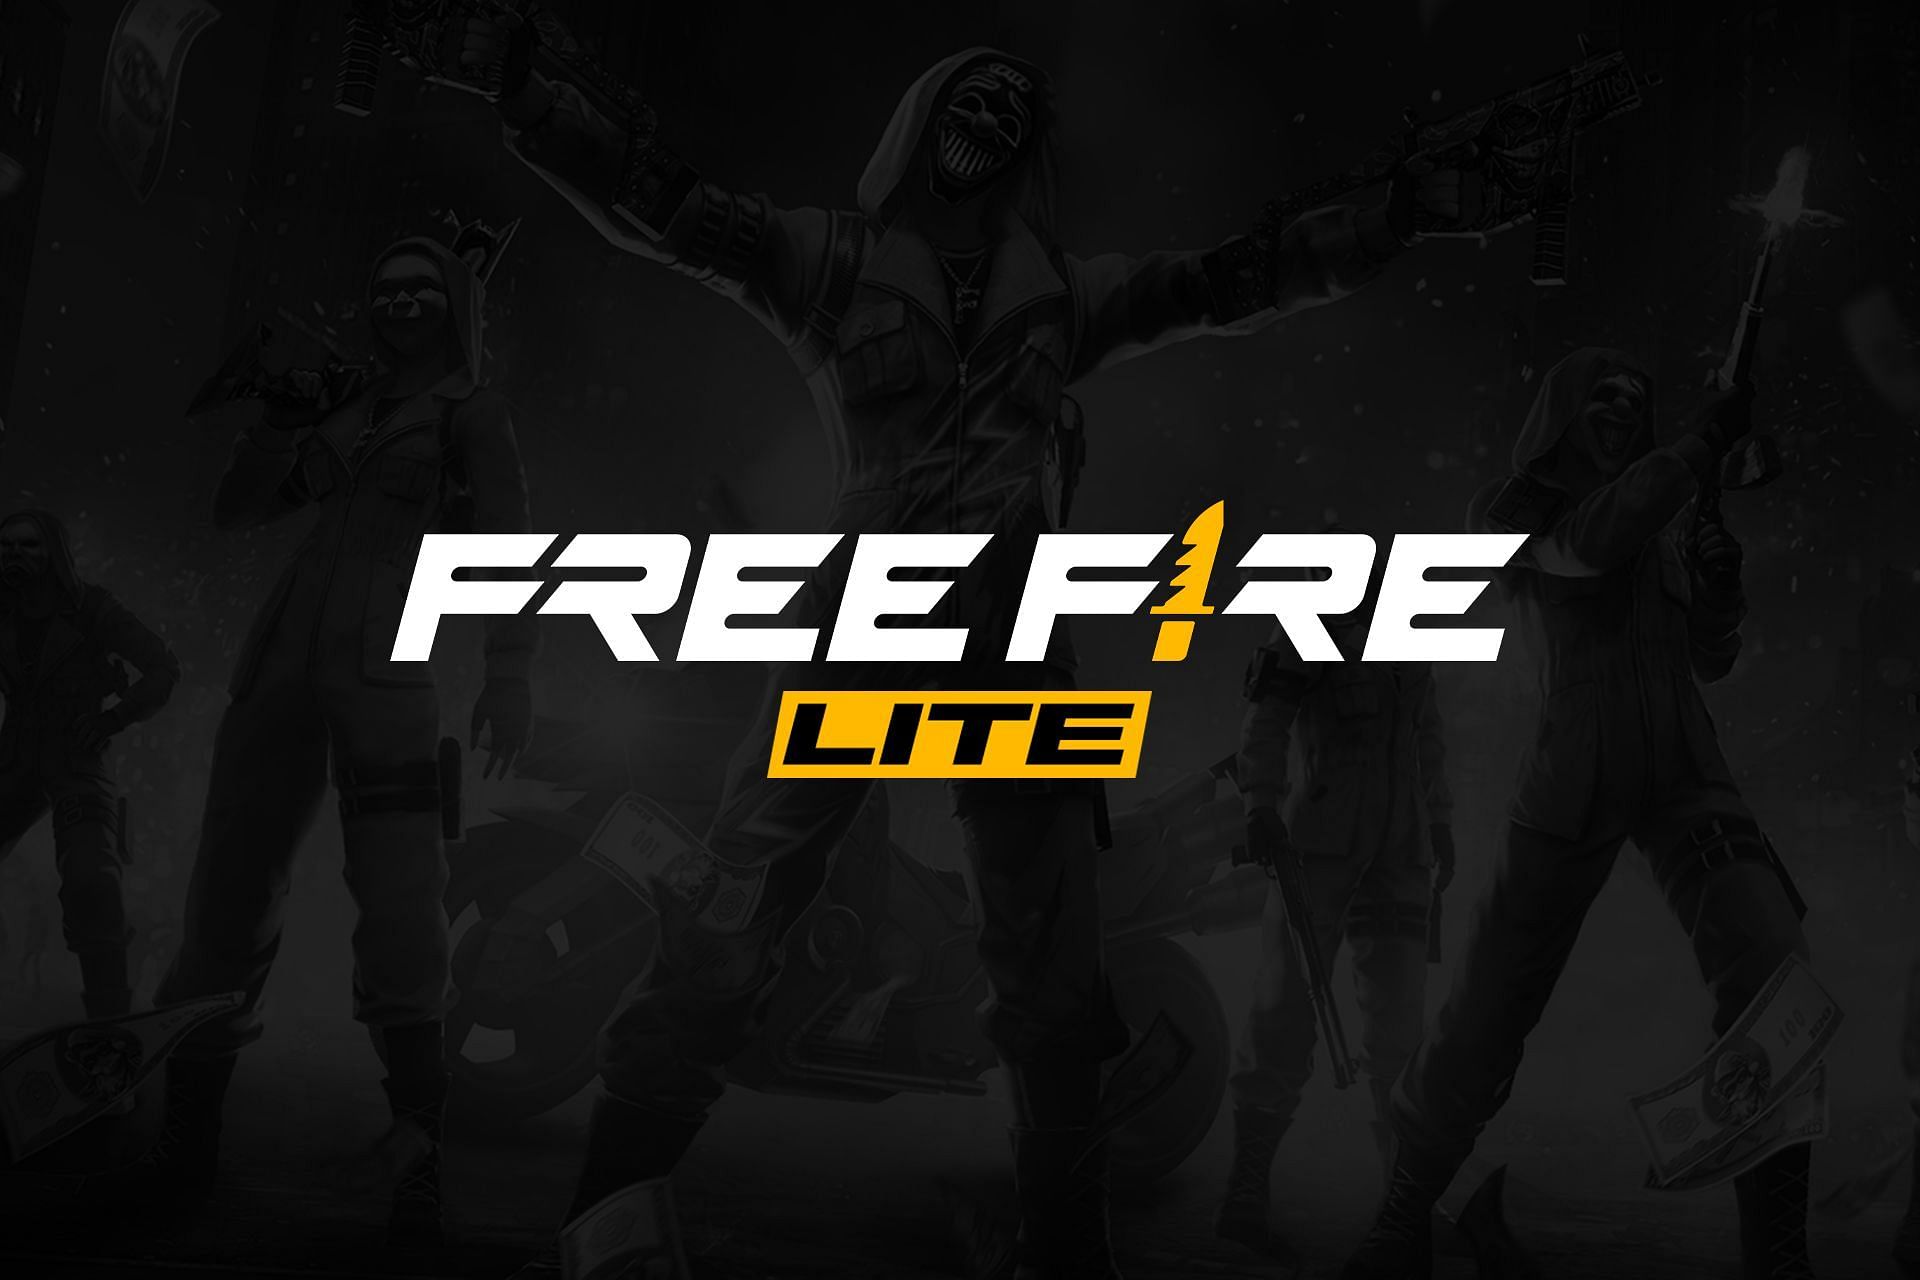 Garena Free Fire Lite - Release Date, Apk Download, Pre Register, Features